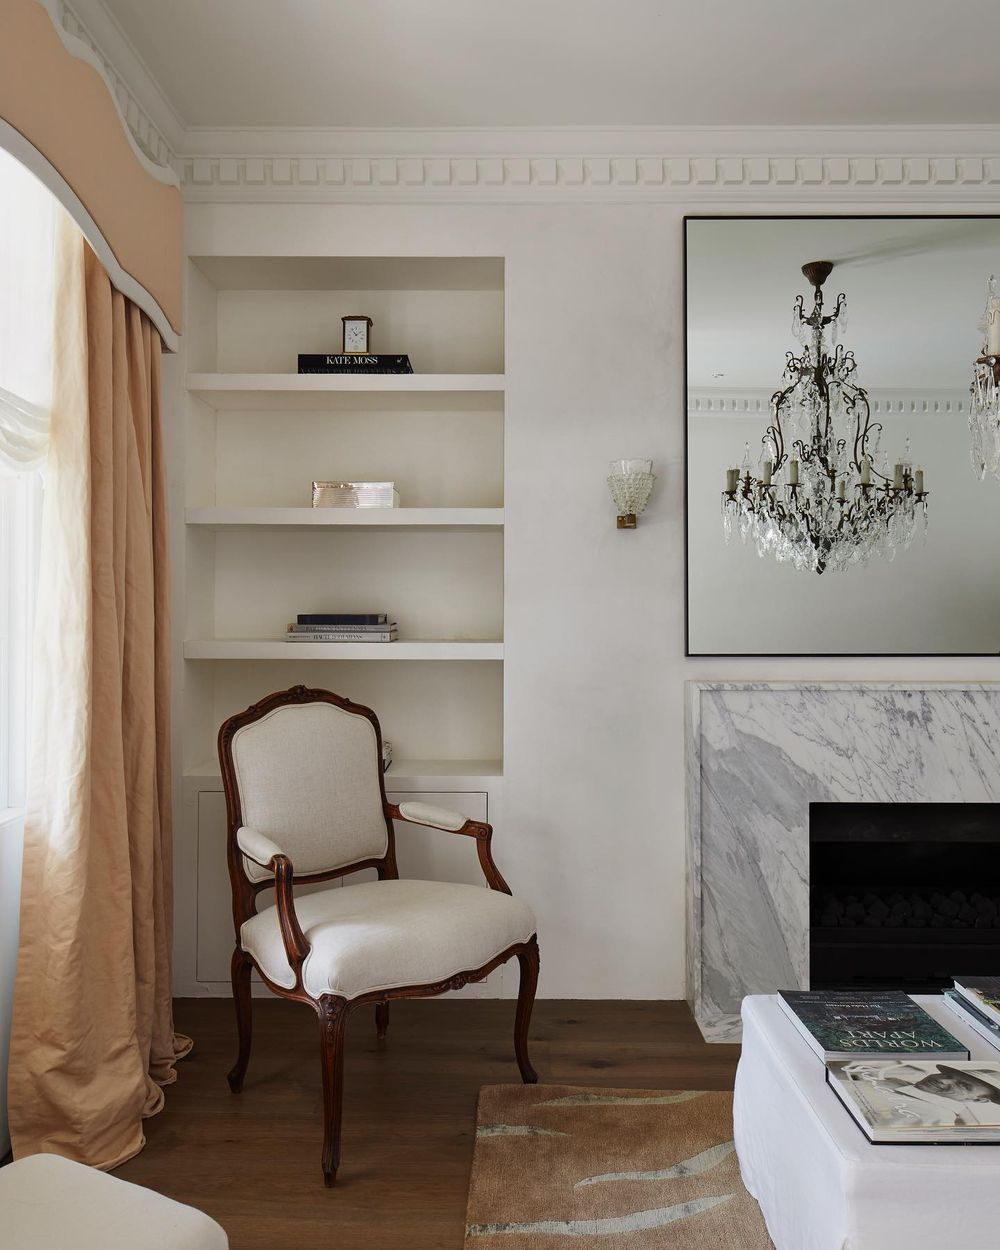 Vintage Decor chair in modern home via @phoebenicol.interiors